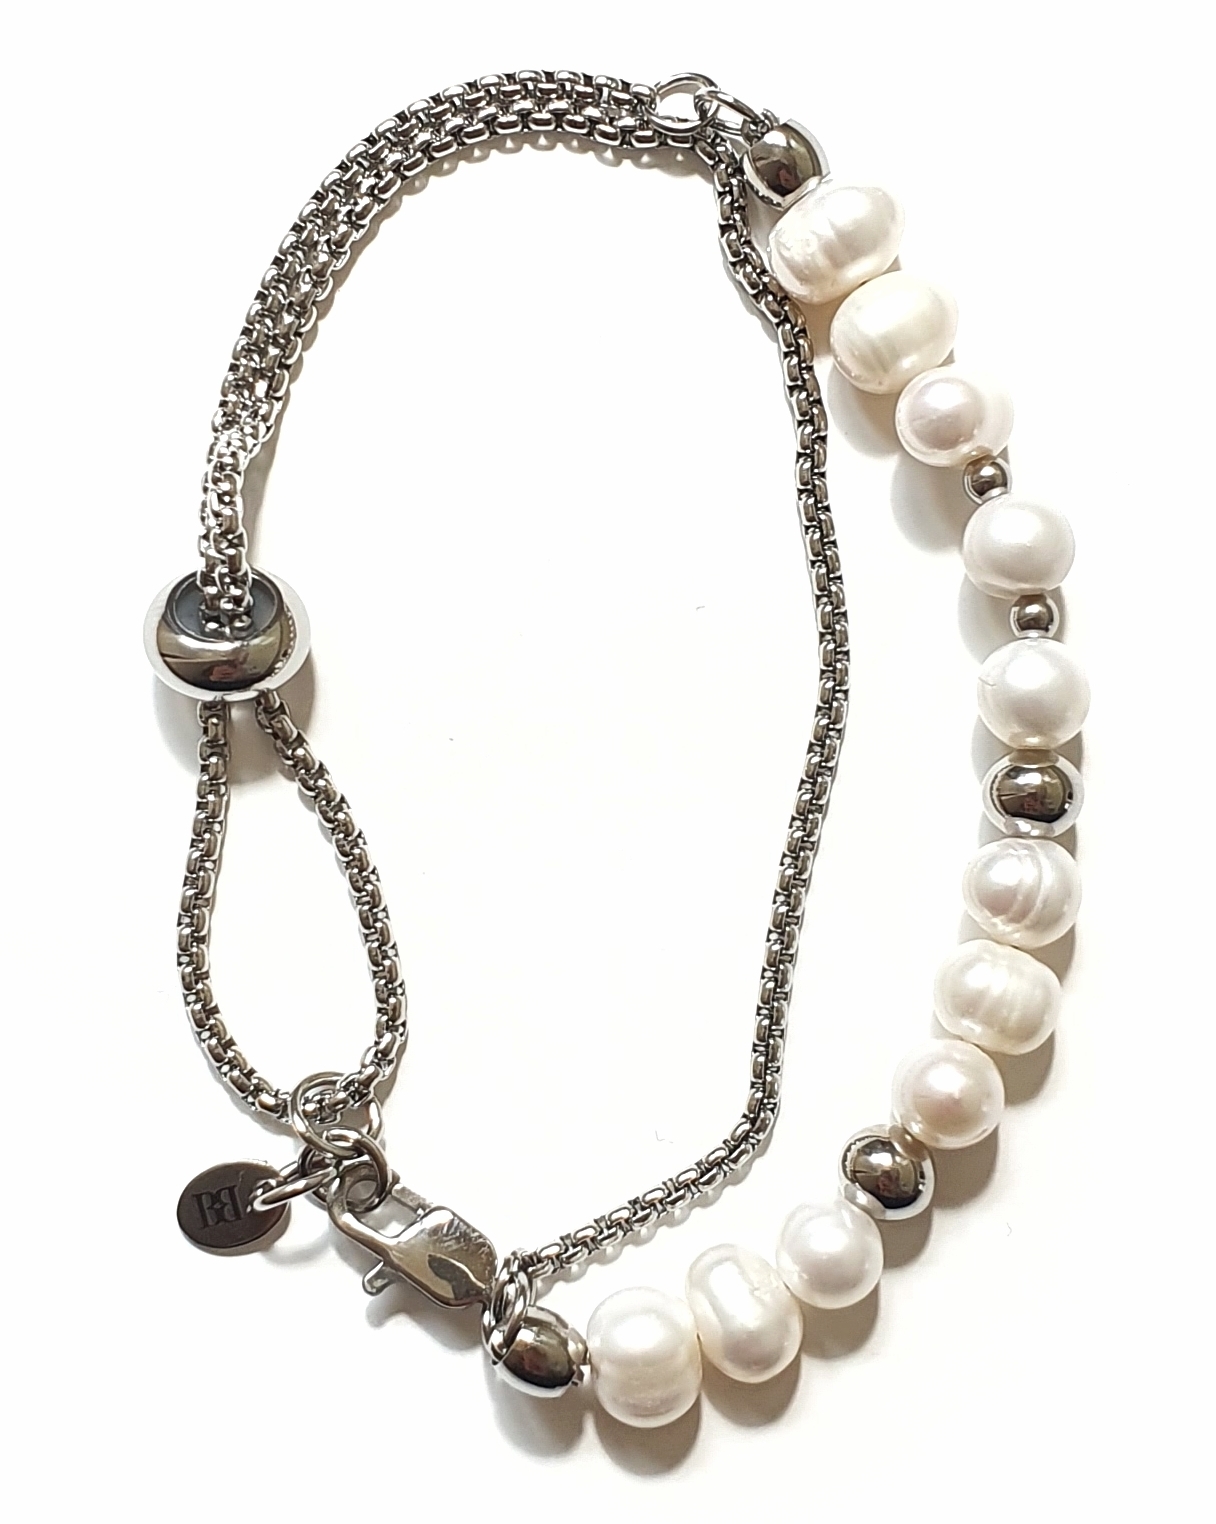 Layered pearl bracelet